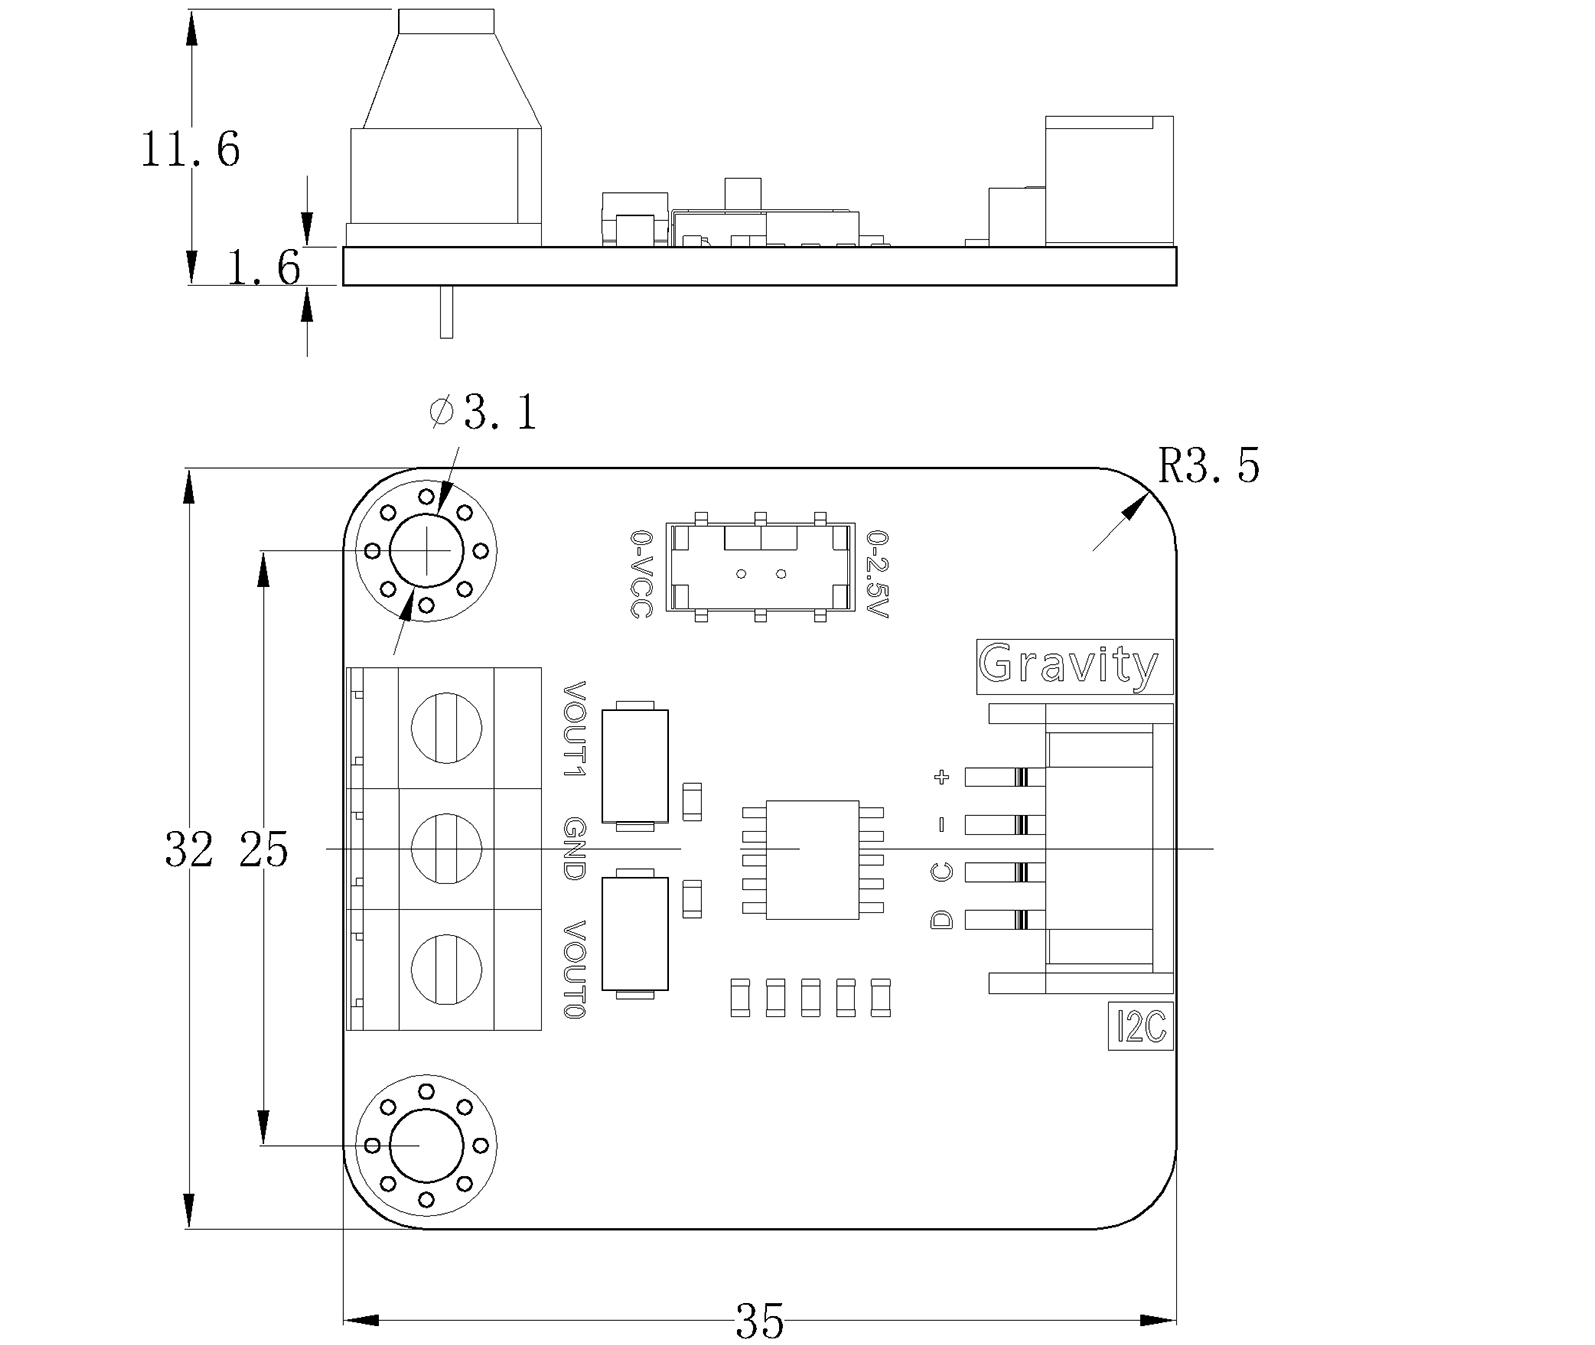 Gravity: GP8503 2-Channel 12-bit I2C to 0-2.5V/VCC DAC Module